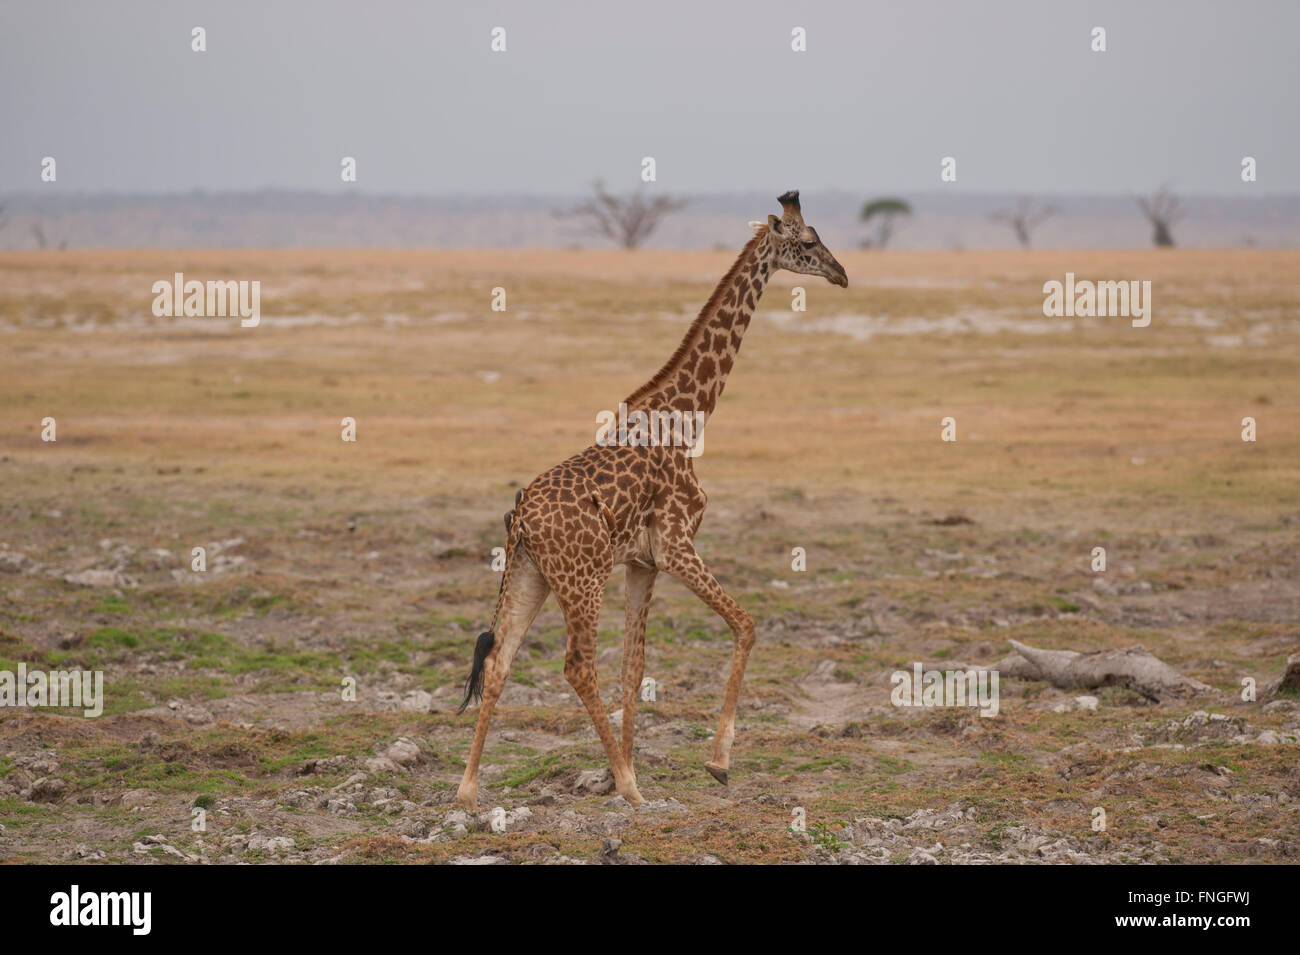 Giraffe standing in the Amboseli National Park in Kenya Stock Photo